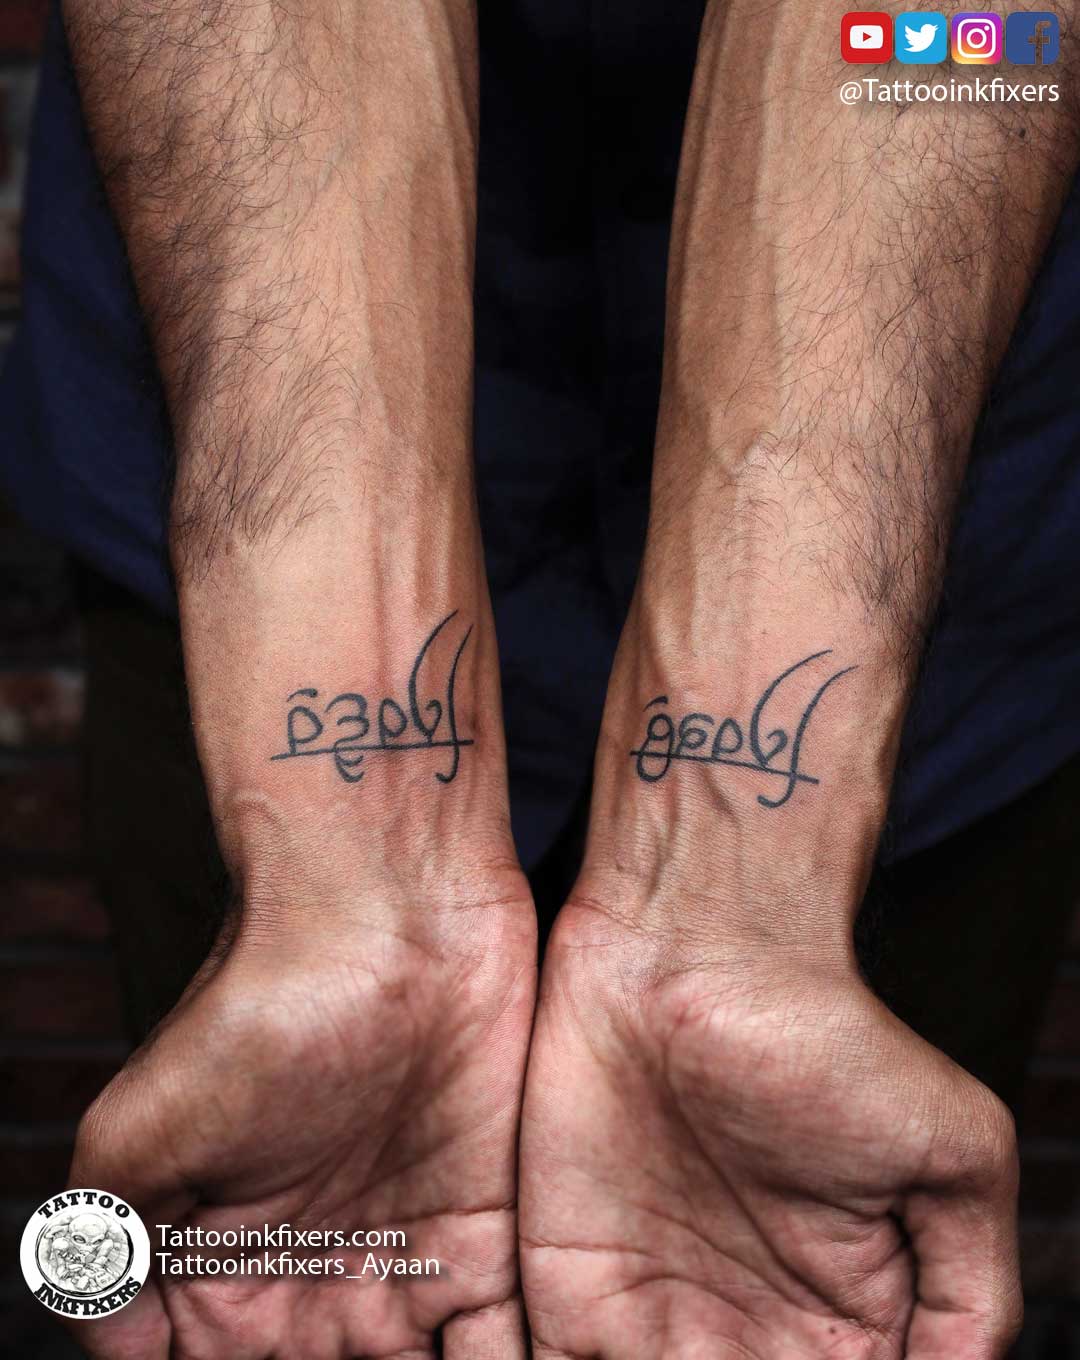 Nirbhau Nirvair Tattoo : ਨਿਰਭਉ ਨਿਰਵੈਰ Punjabi tattoo meaning 